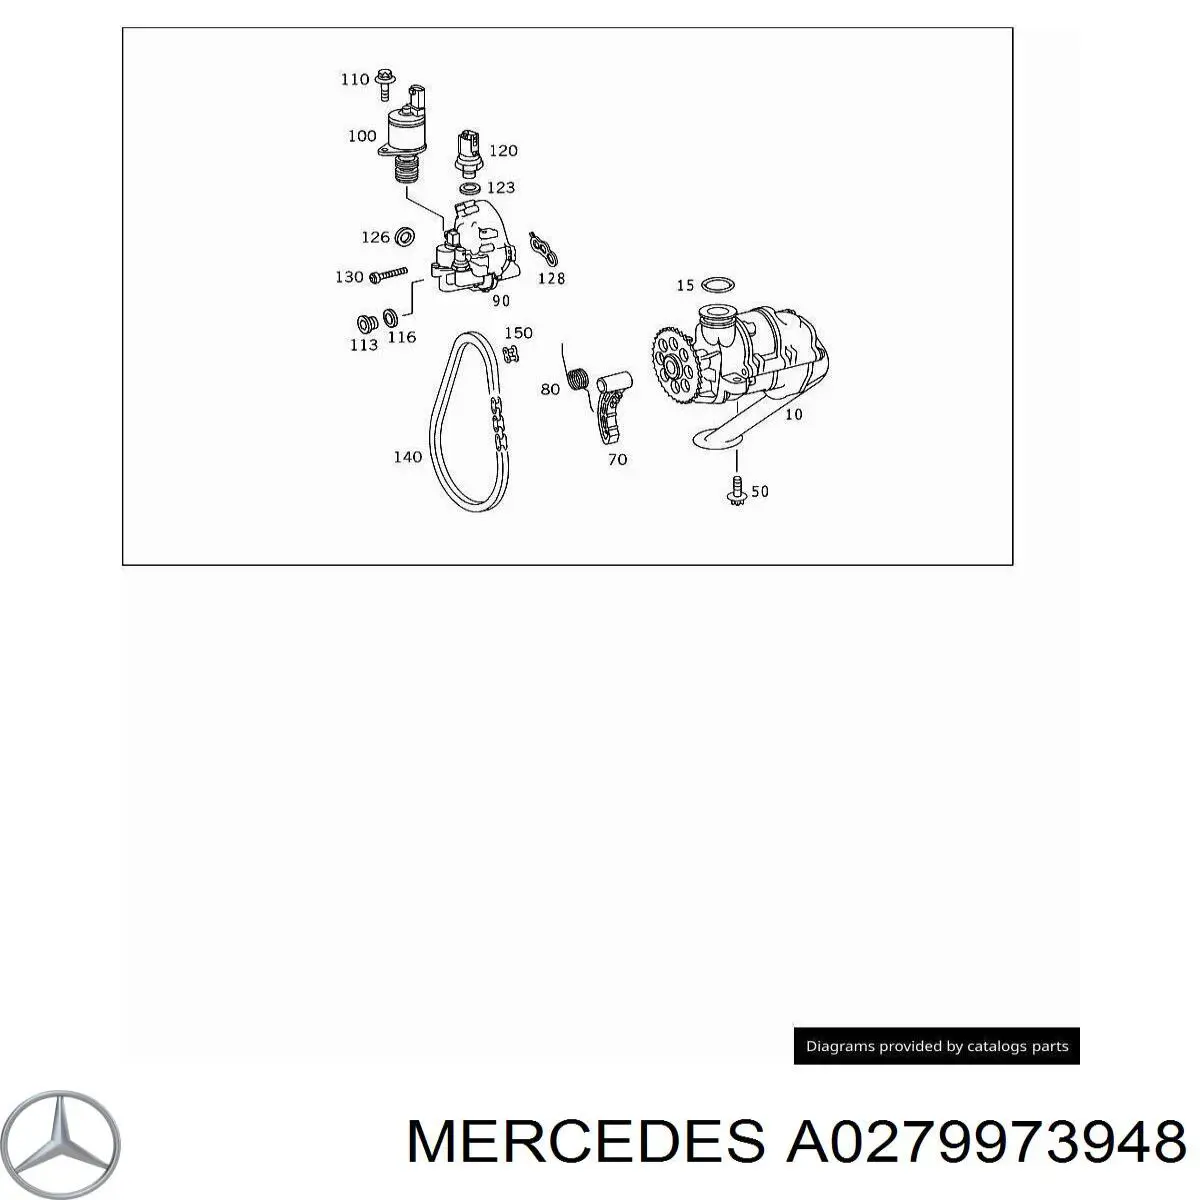 Vedante de bomba de óleo para Mercedes S (C216)